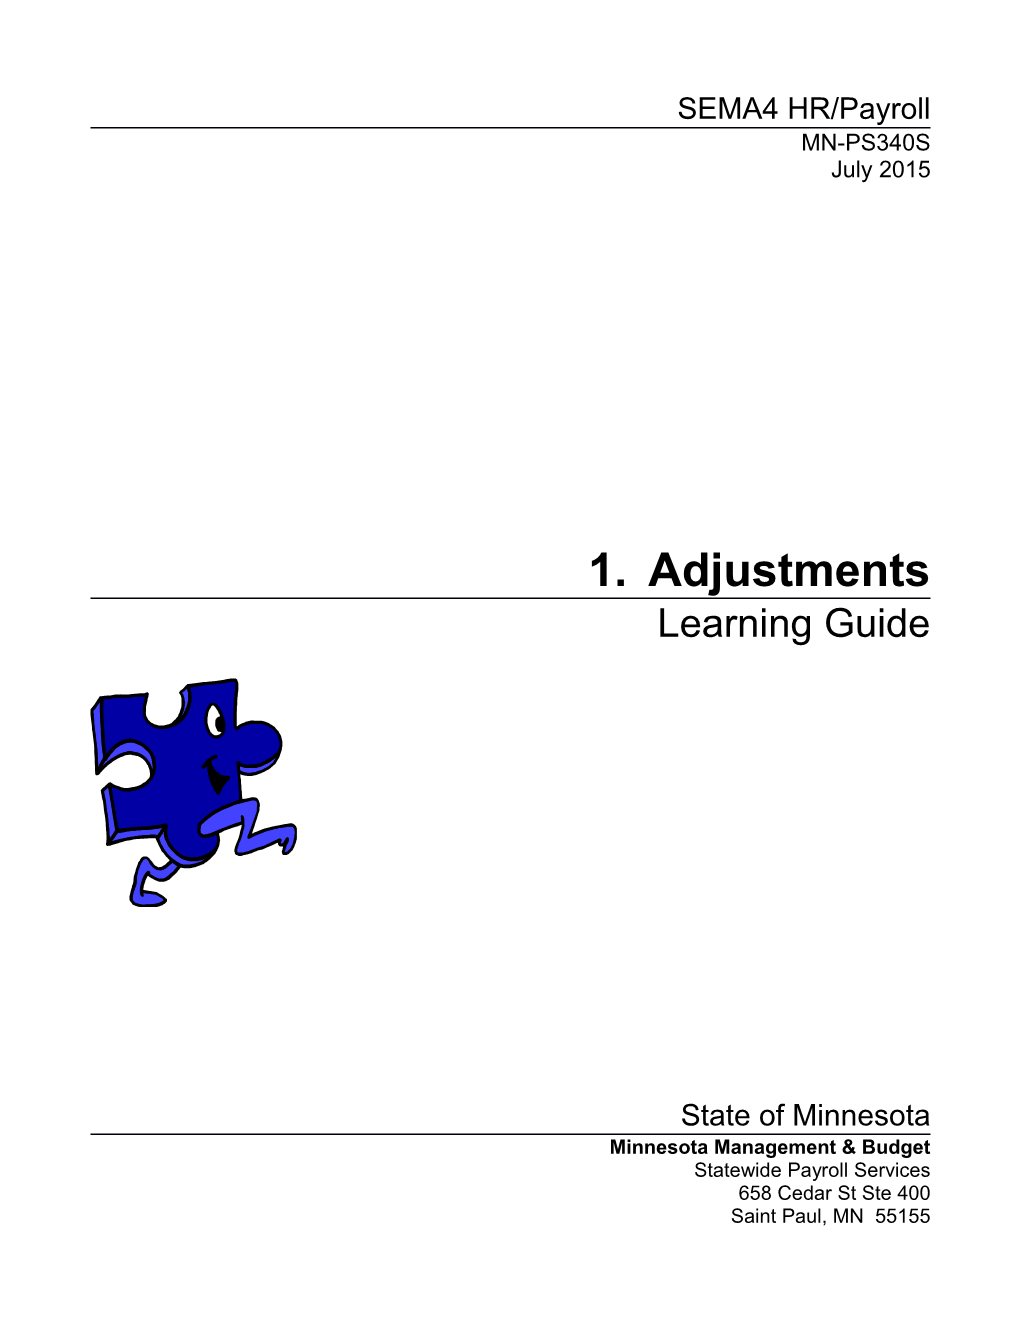 SEMA4 LEARNING GUIDE: Adjustments